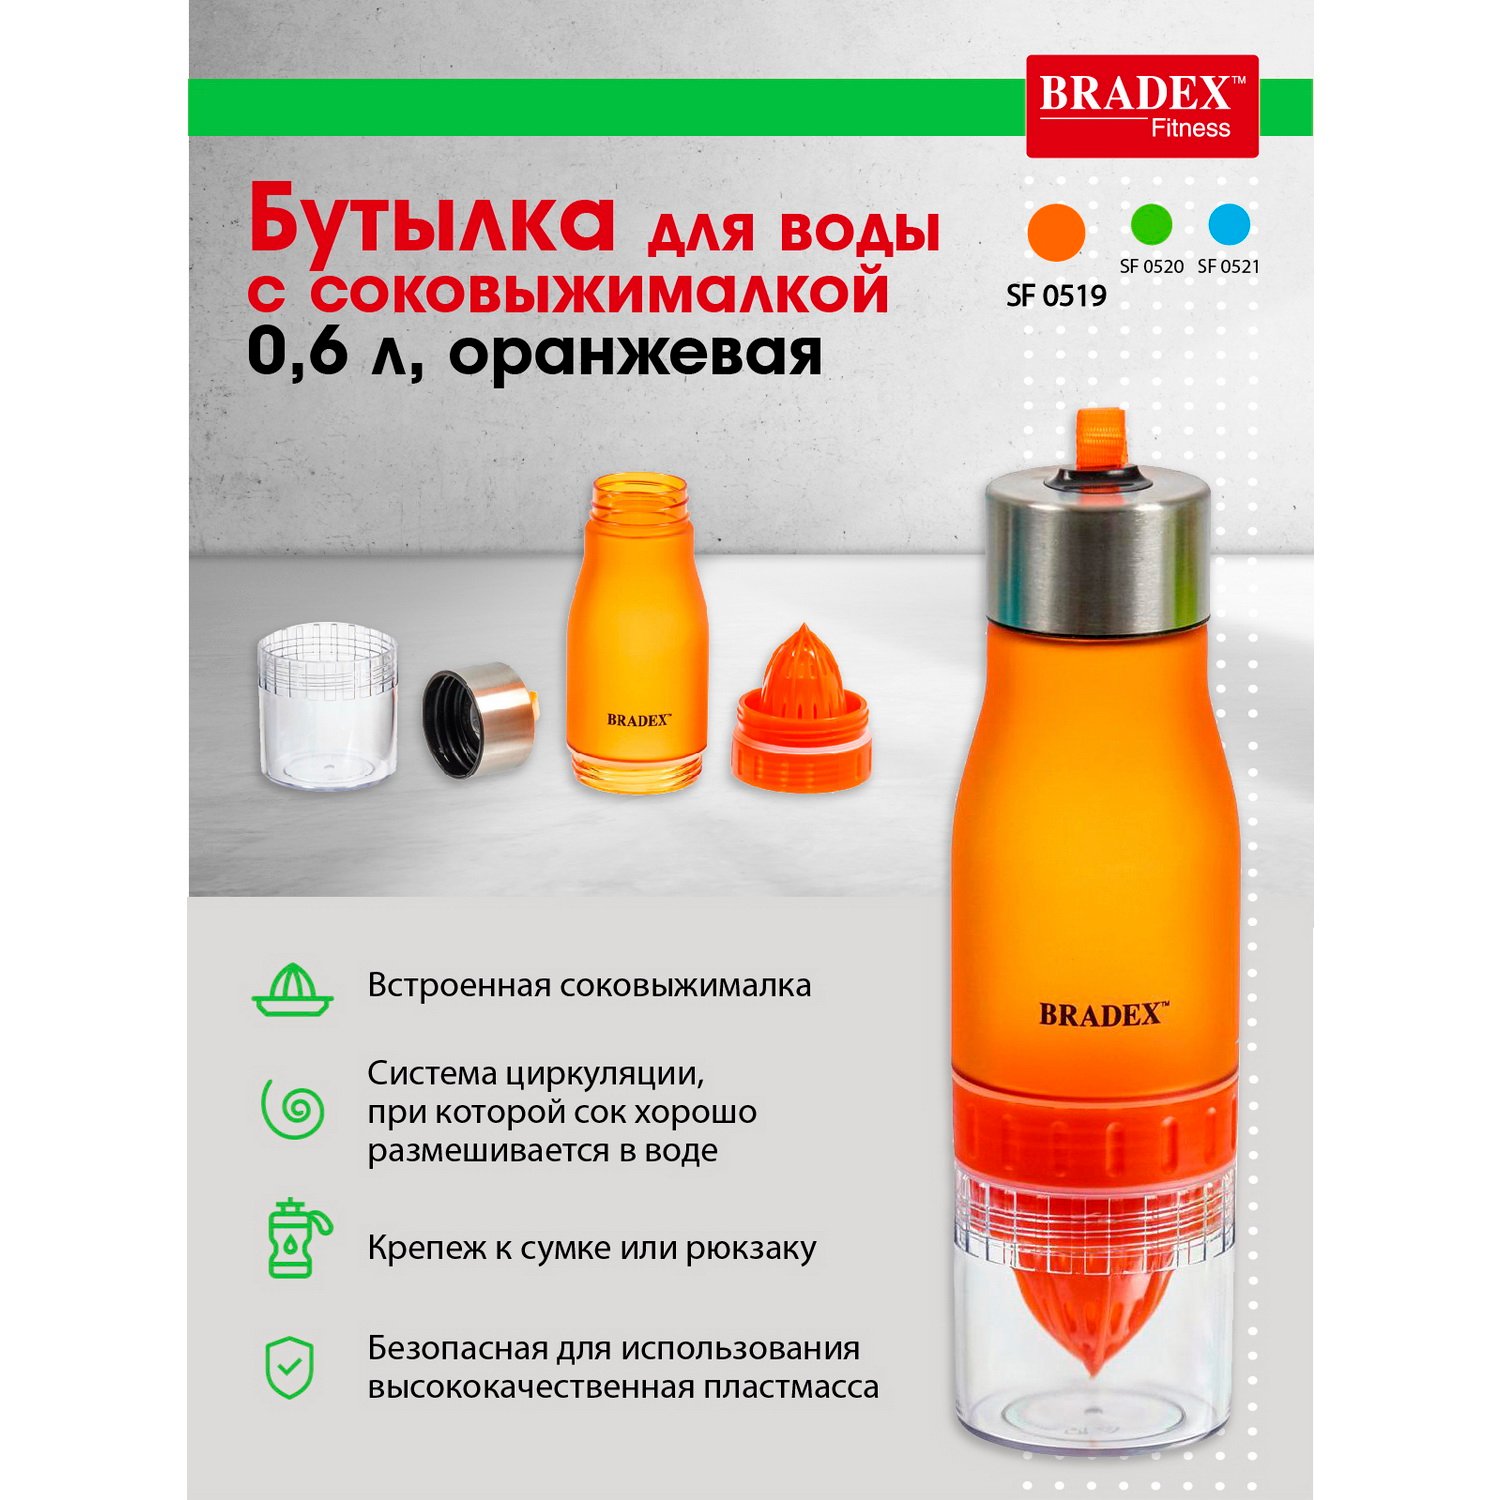 Бутылка для воды Bradex 0.6л оранжевая с соковыжималкой SF 0519 BRADEX - фото 5